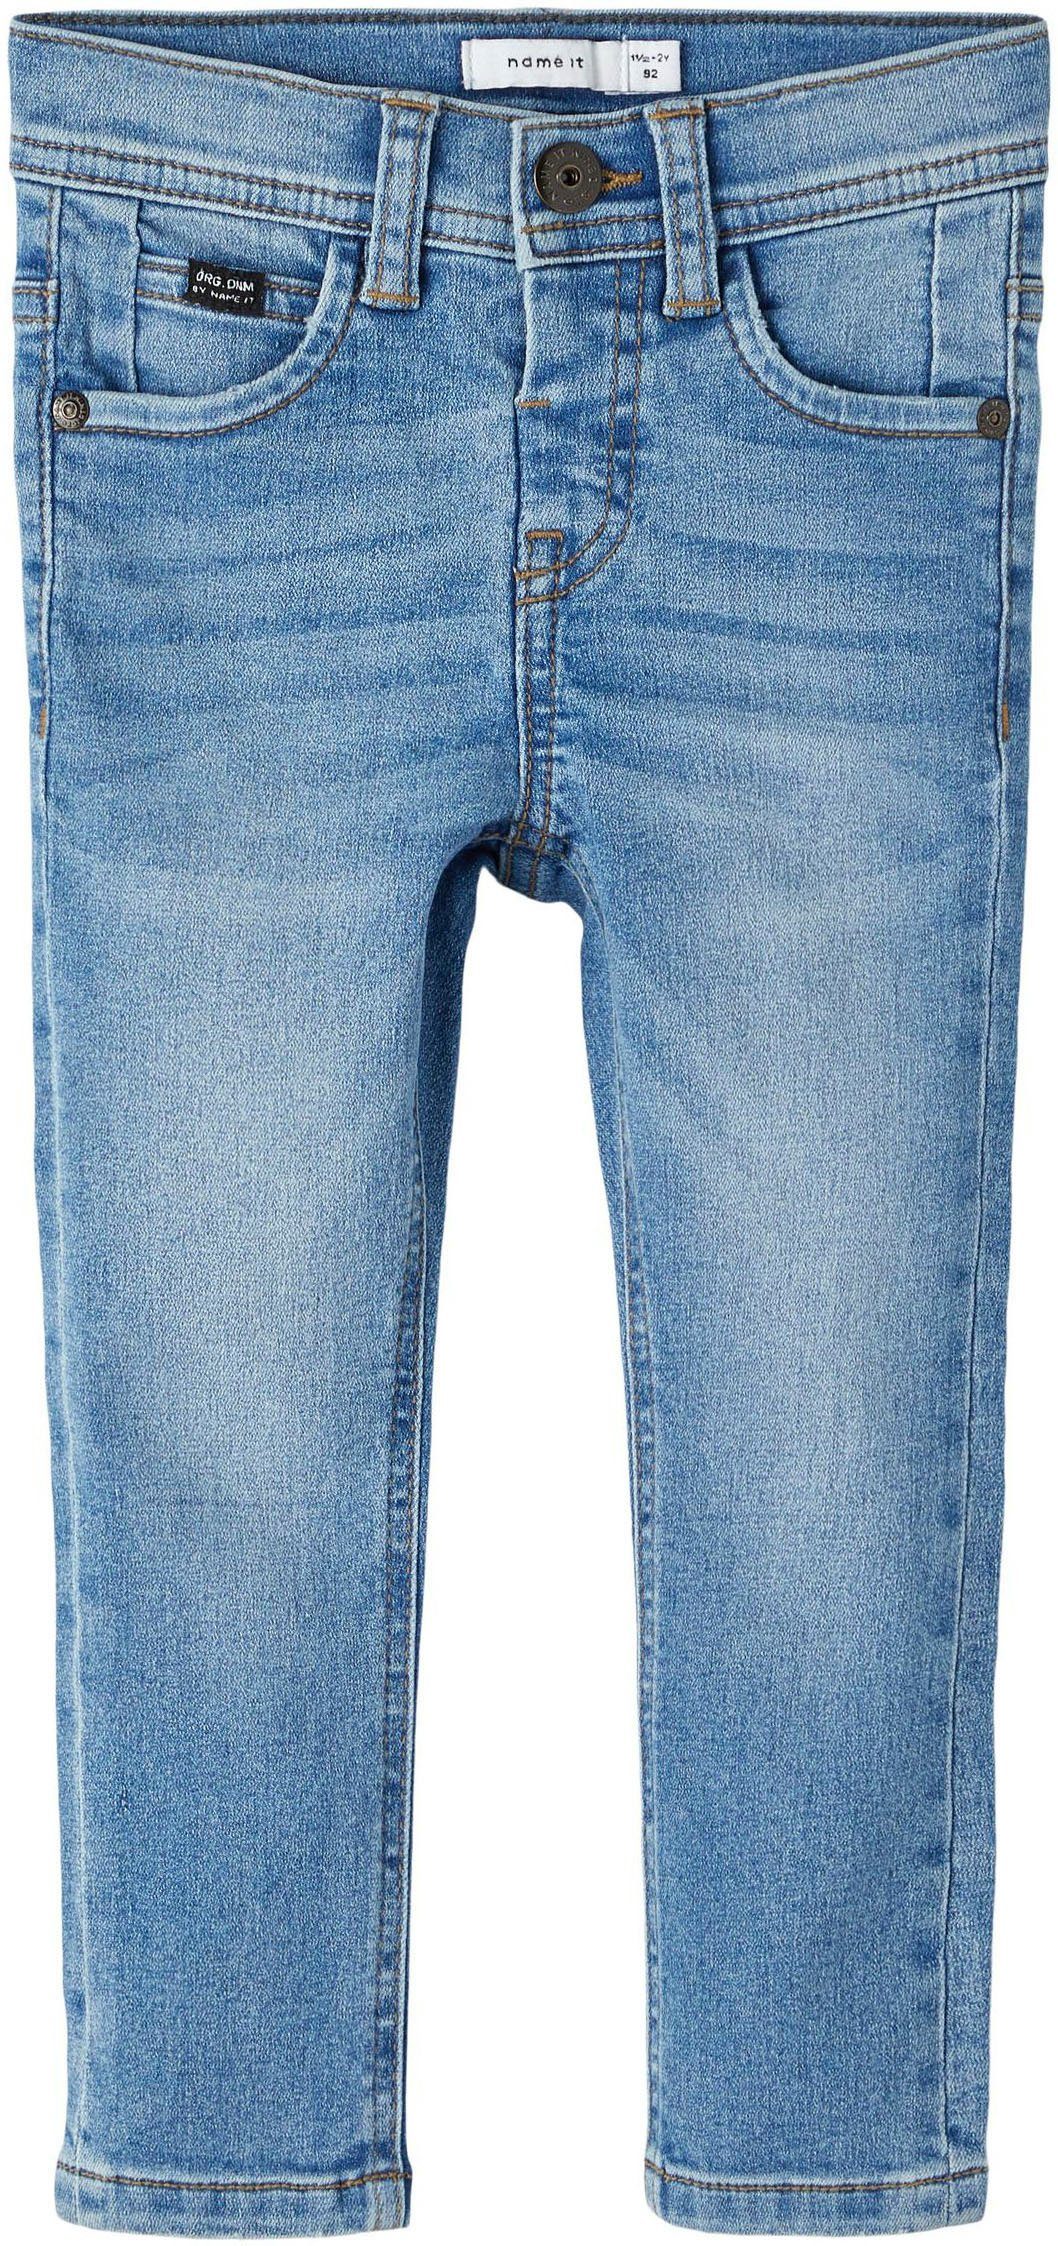 DNMTHRIS Verstellbarer It Name Bund 5-Pocket-Jeans Taille PANT PB, Mittlere NMMSILAS -